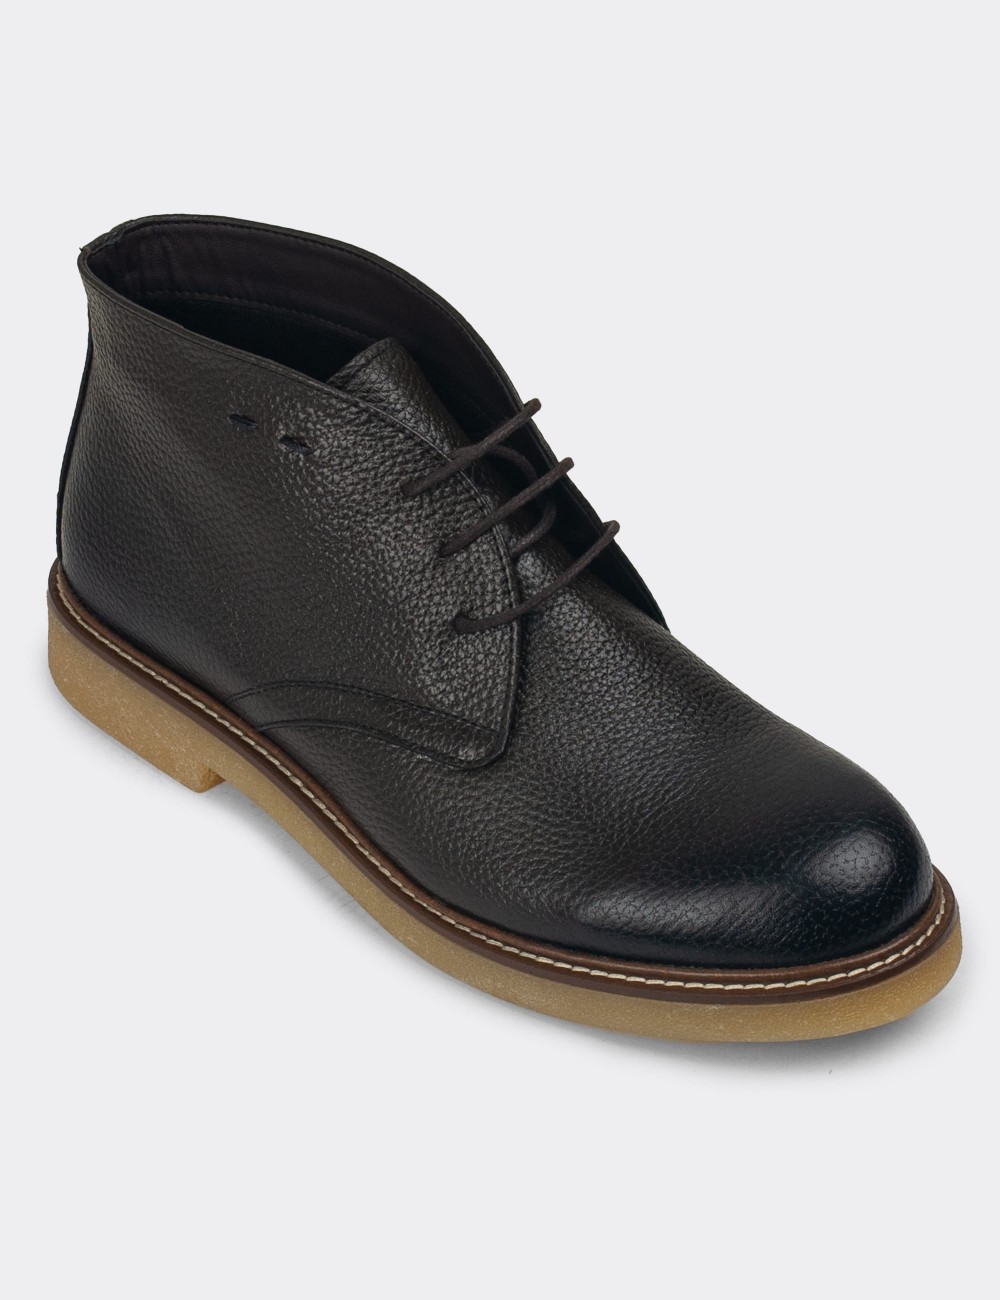 Green Leather Desert Boots - 01295MYSLC03